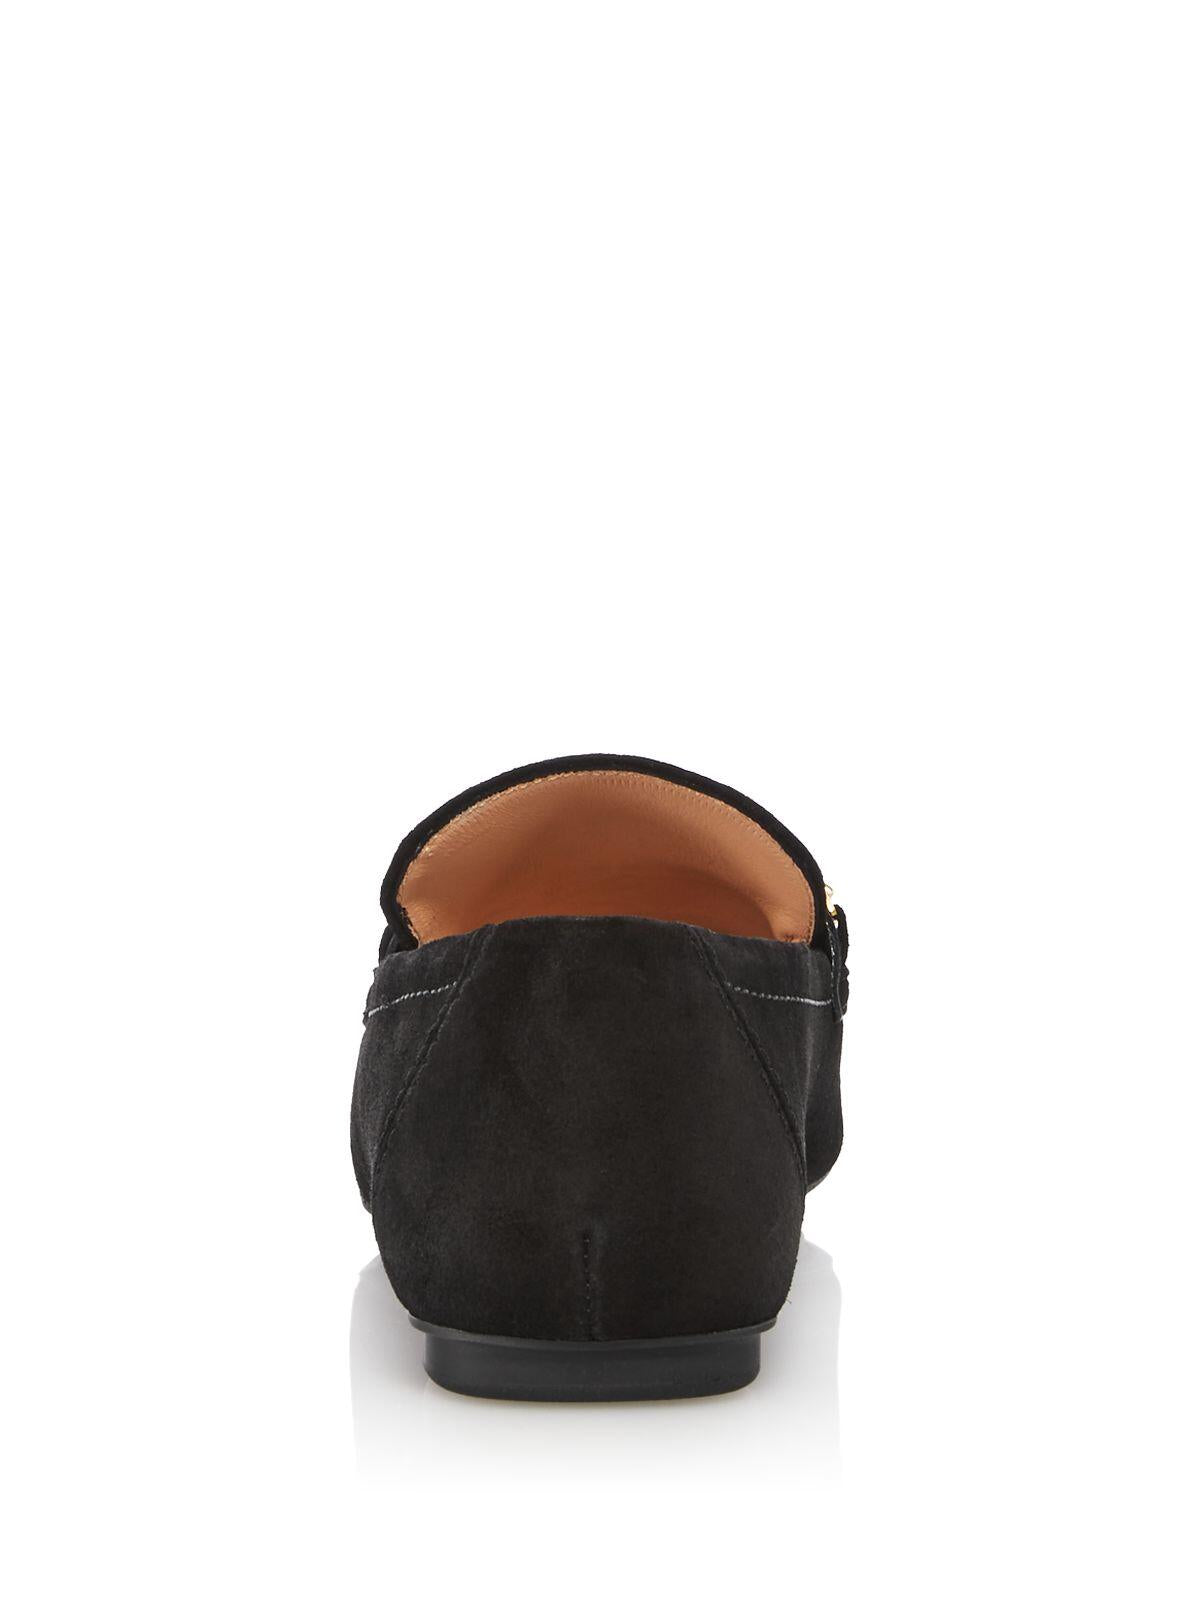 STUART WEITZMAN Womens Black Crystal Hardware Padded Jet Almond Toe Slip On Leather Dress Loafers Shoes 8 B